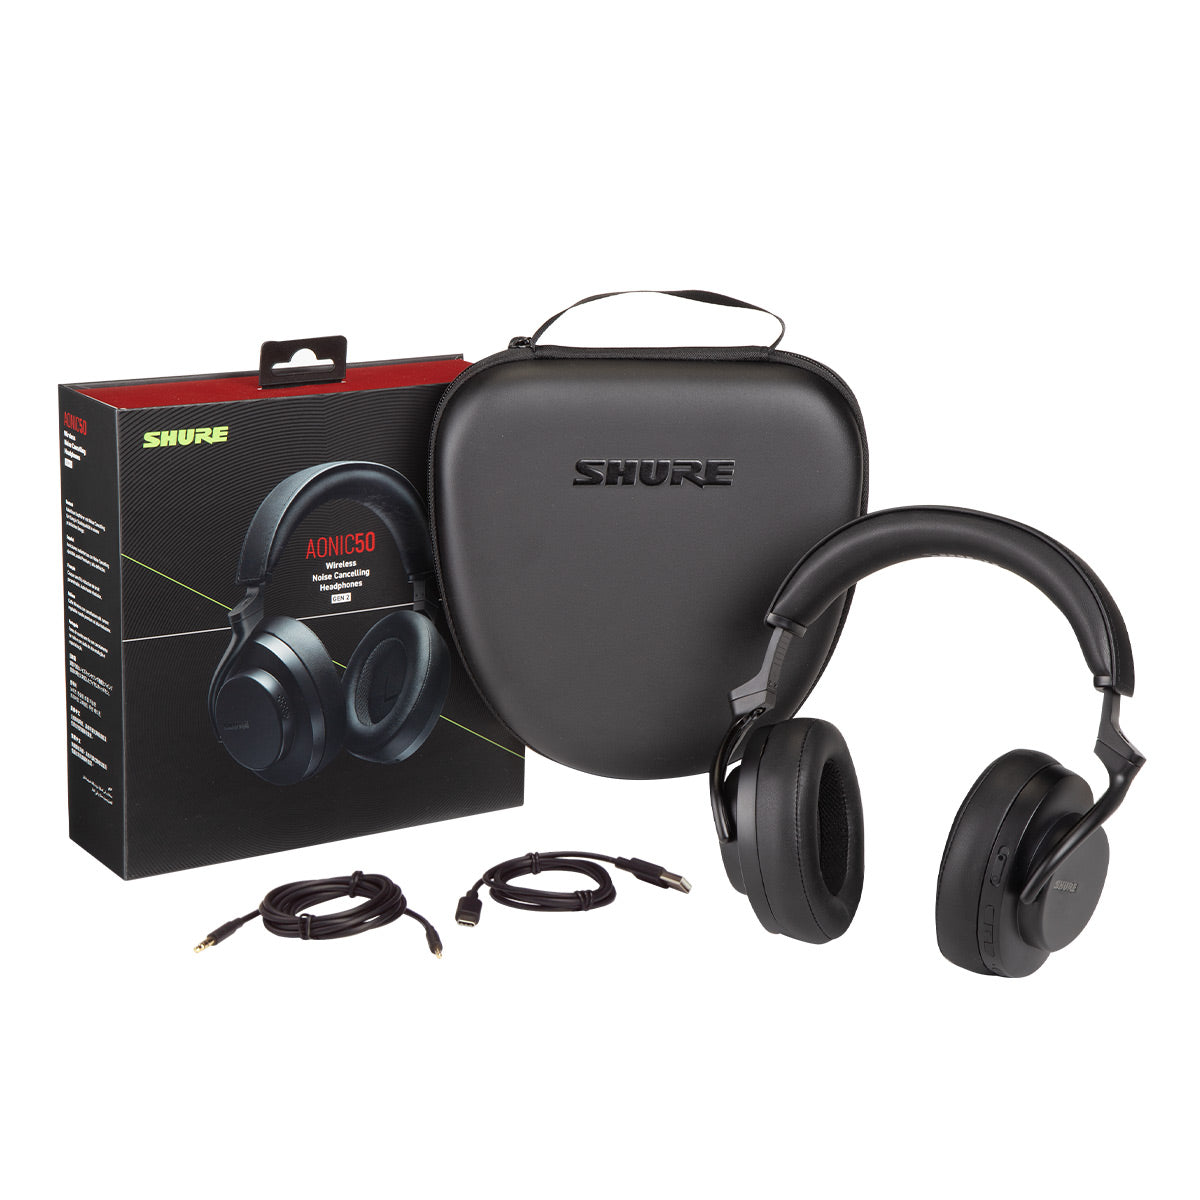 Shure AONIC 50 Gen 2 Bluetooth Wireless Noise Cancelling Headphones